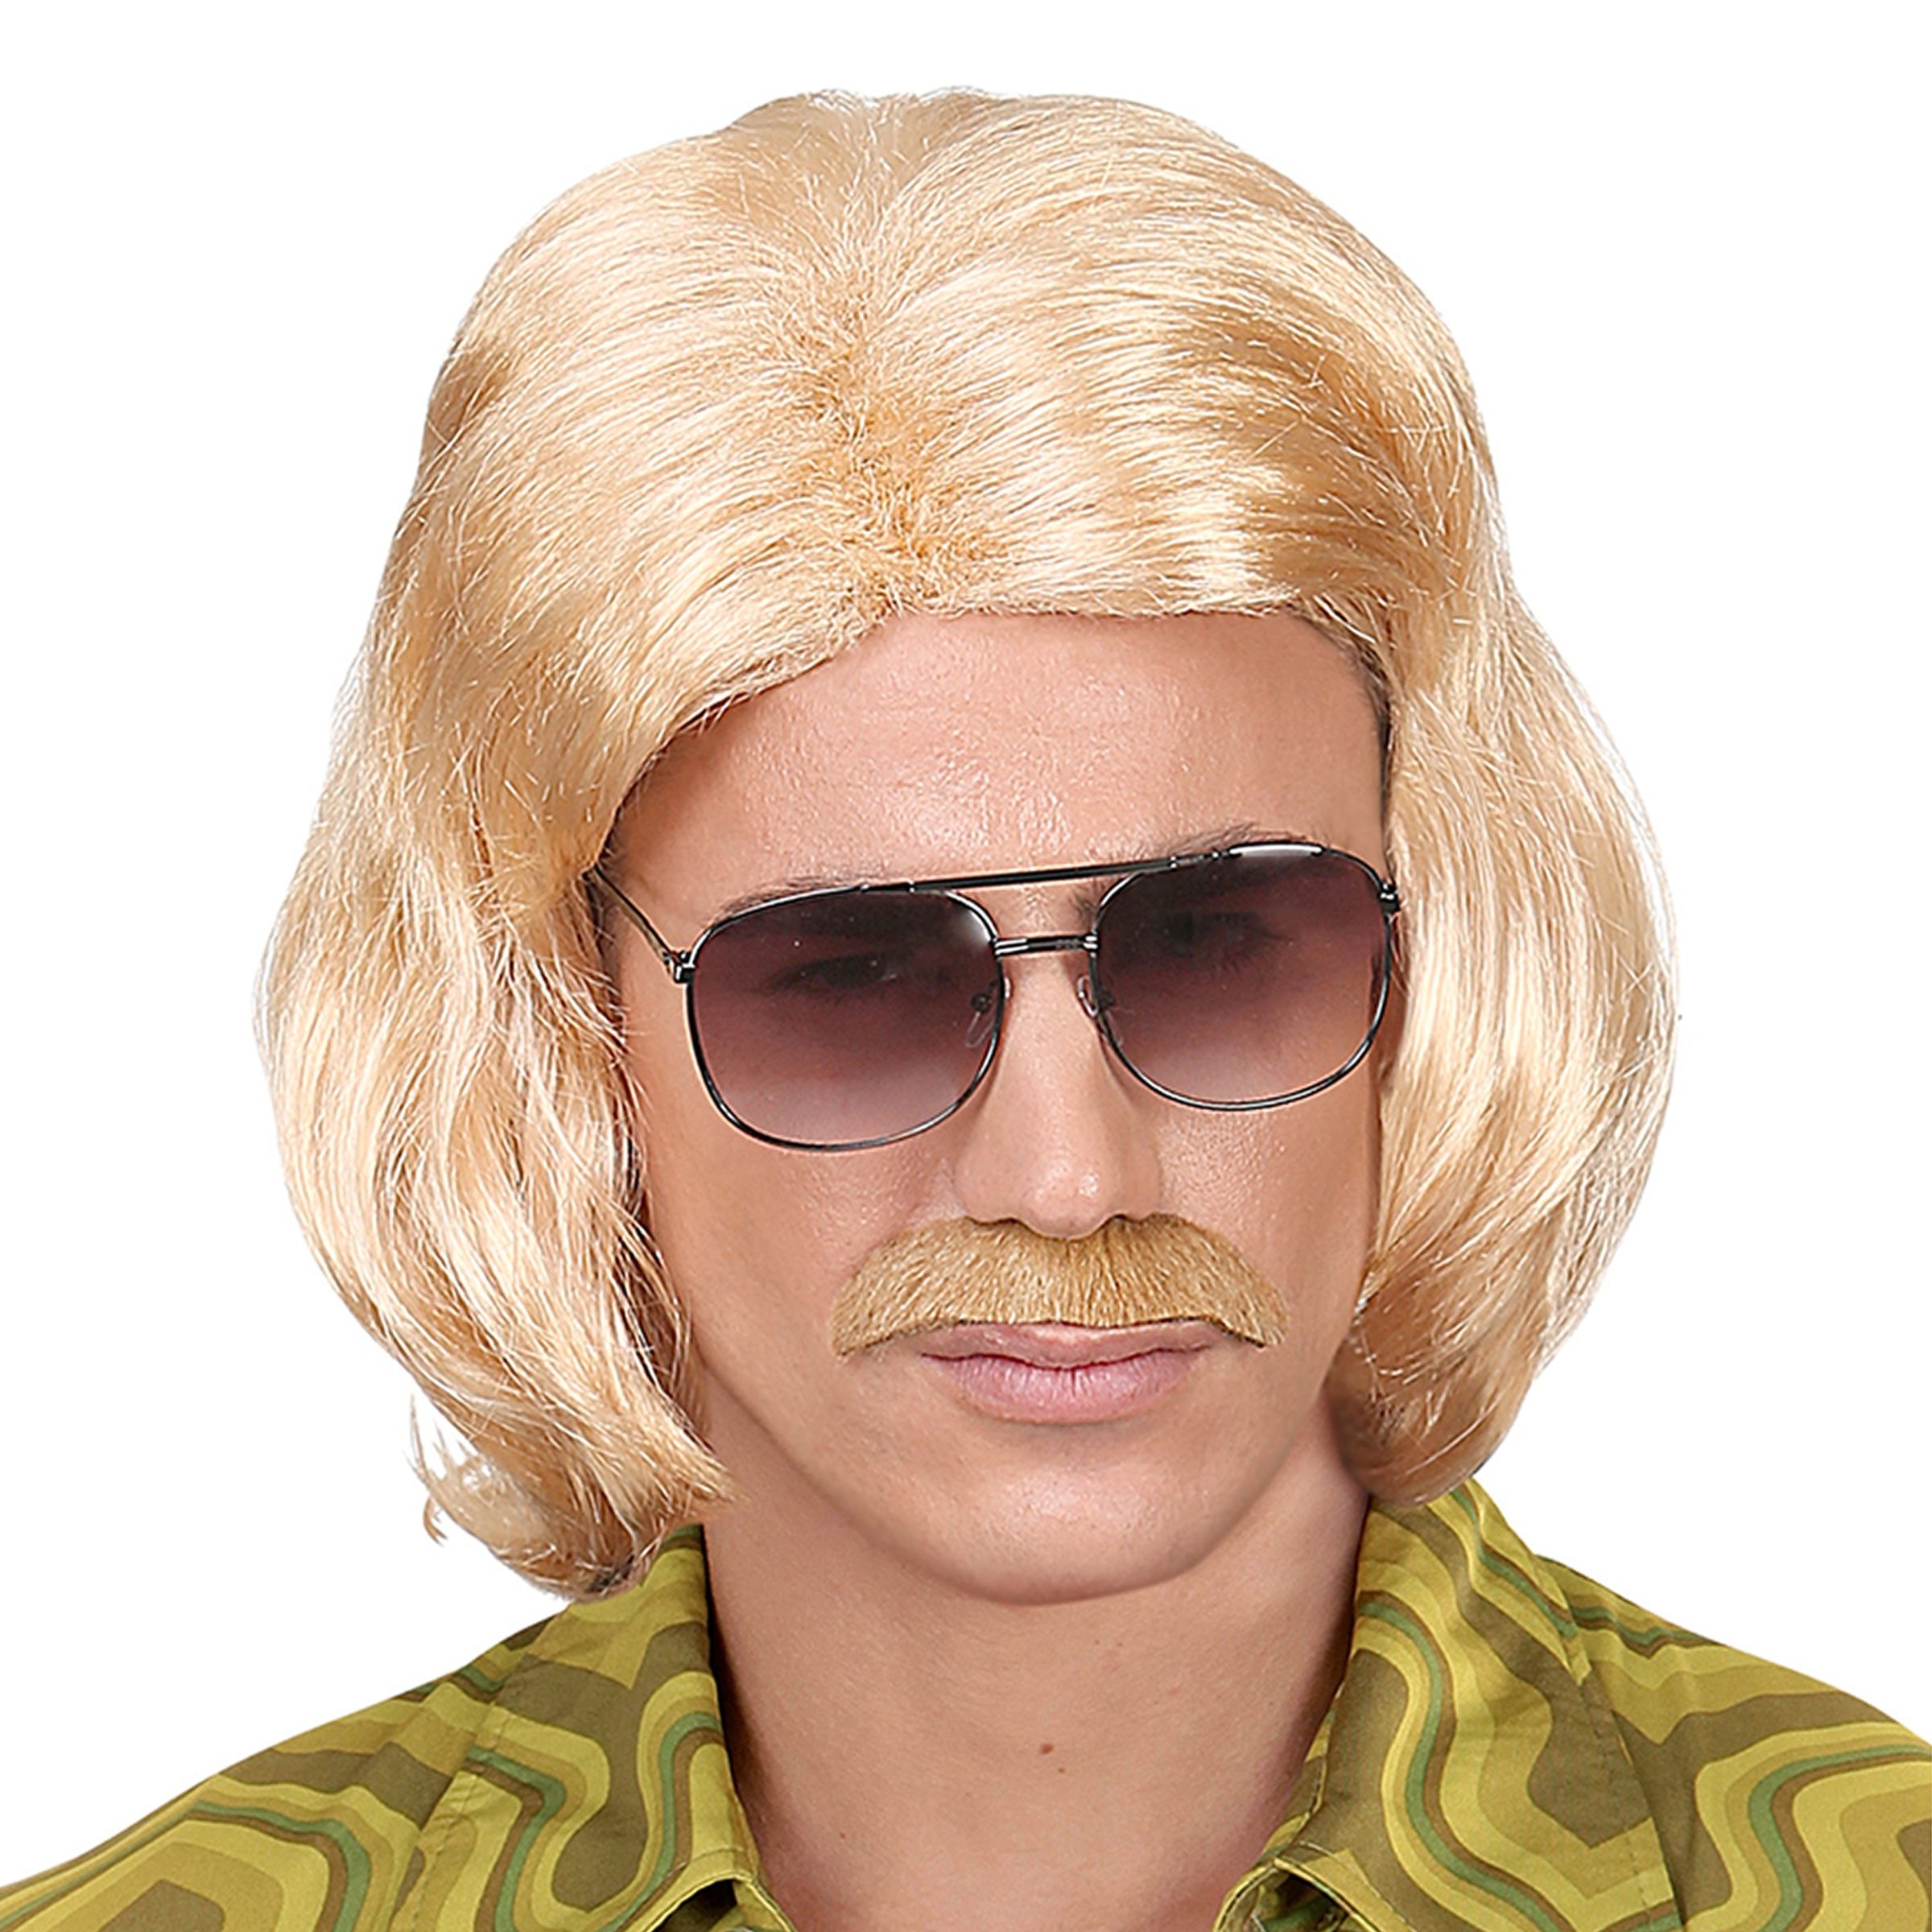 70-tals Dandy Blond Perukset med Mustasch - One size